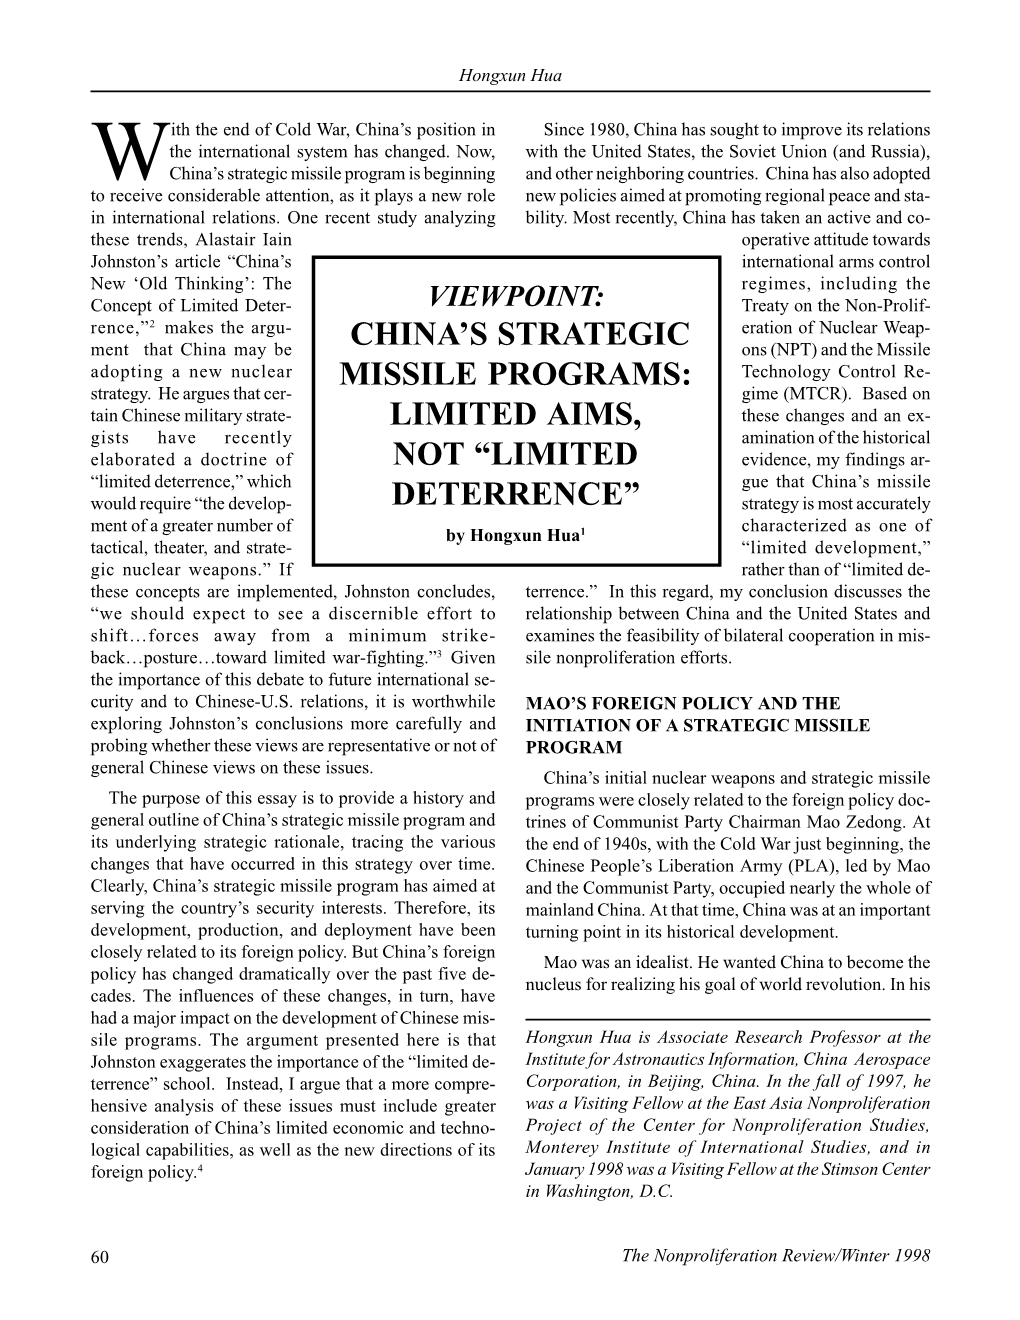 Npr 5.2: China's Strategic Missile Programs: Limited